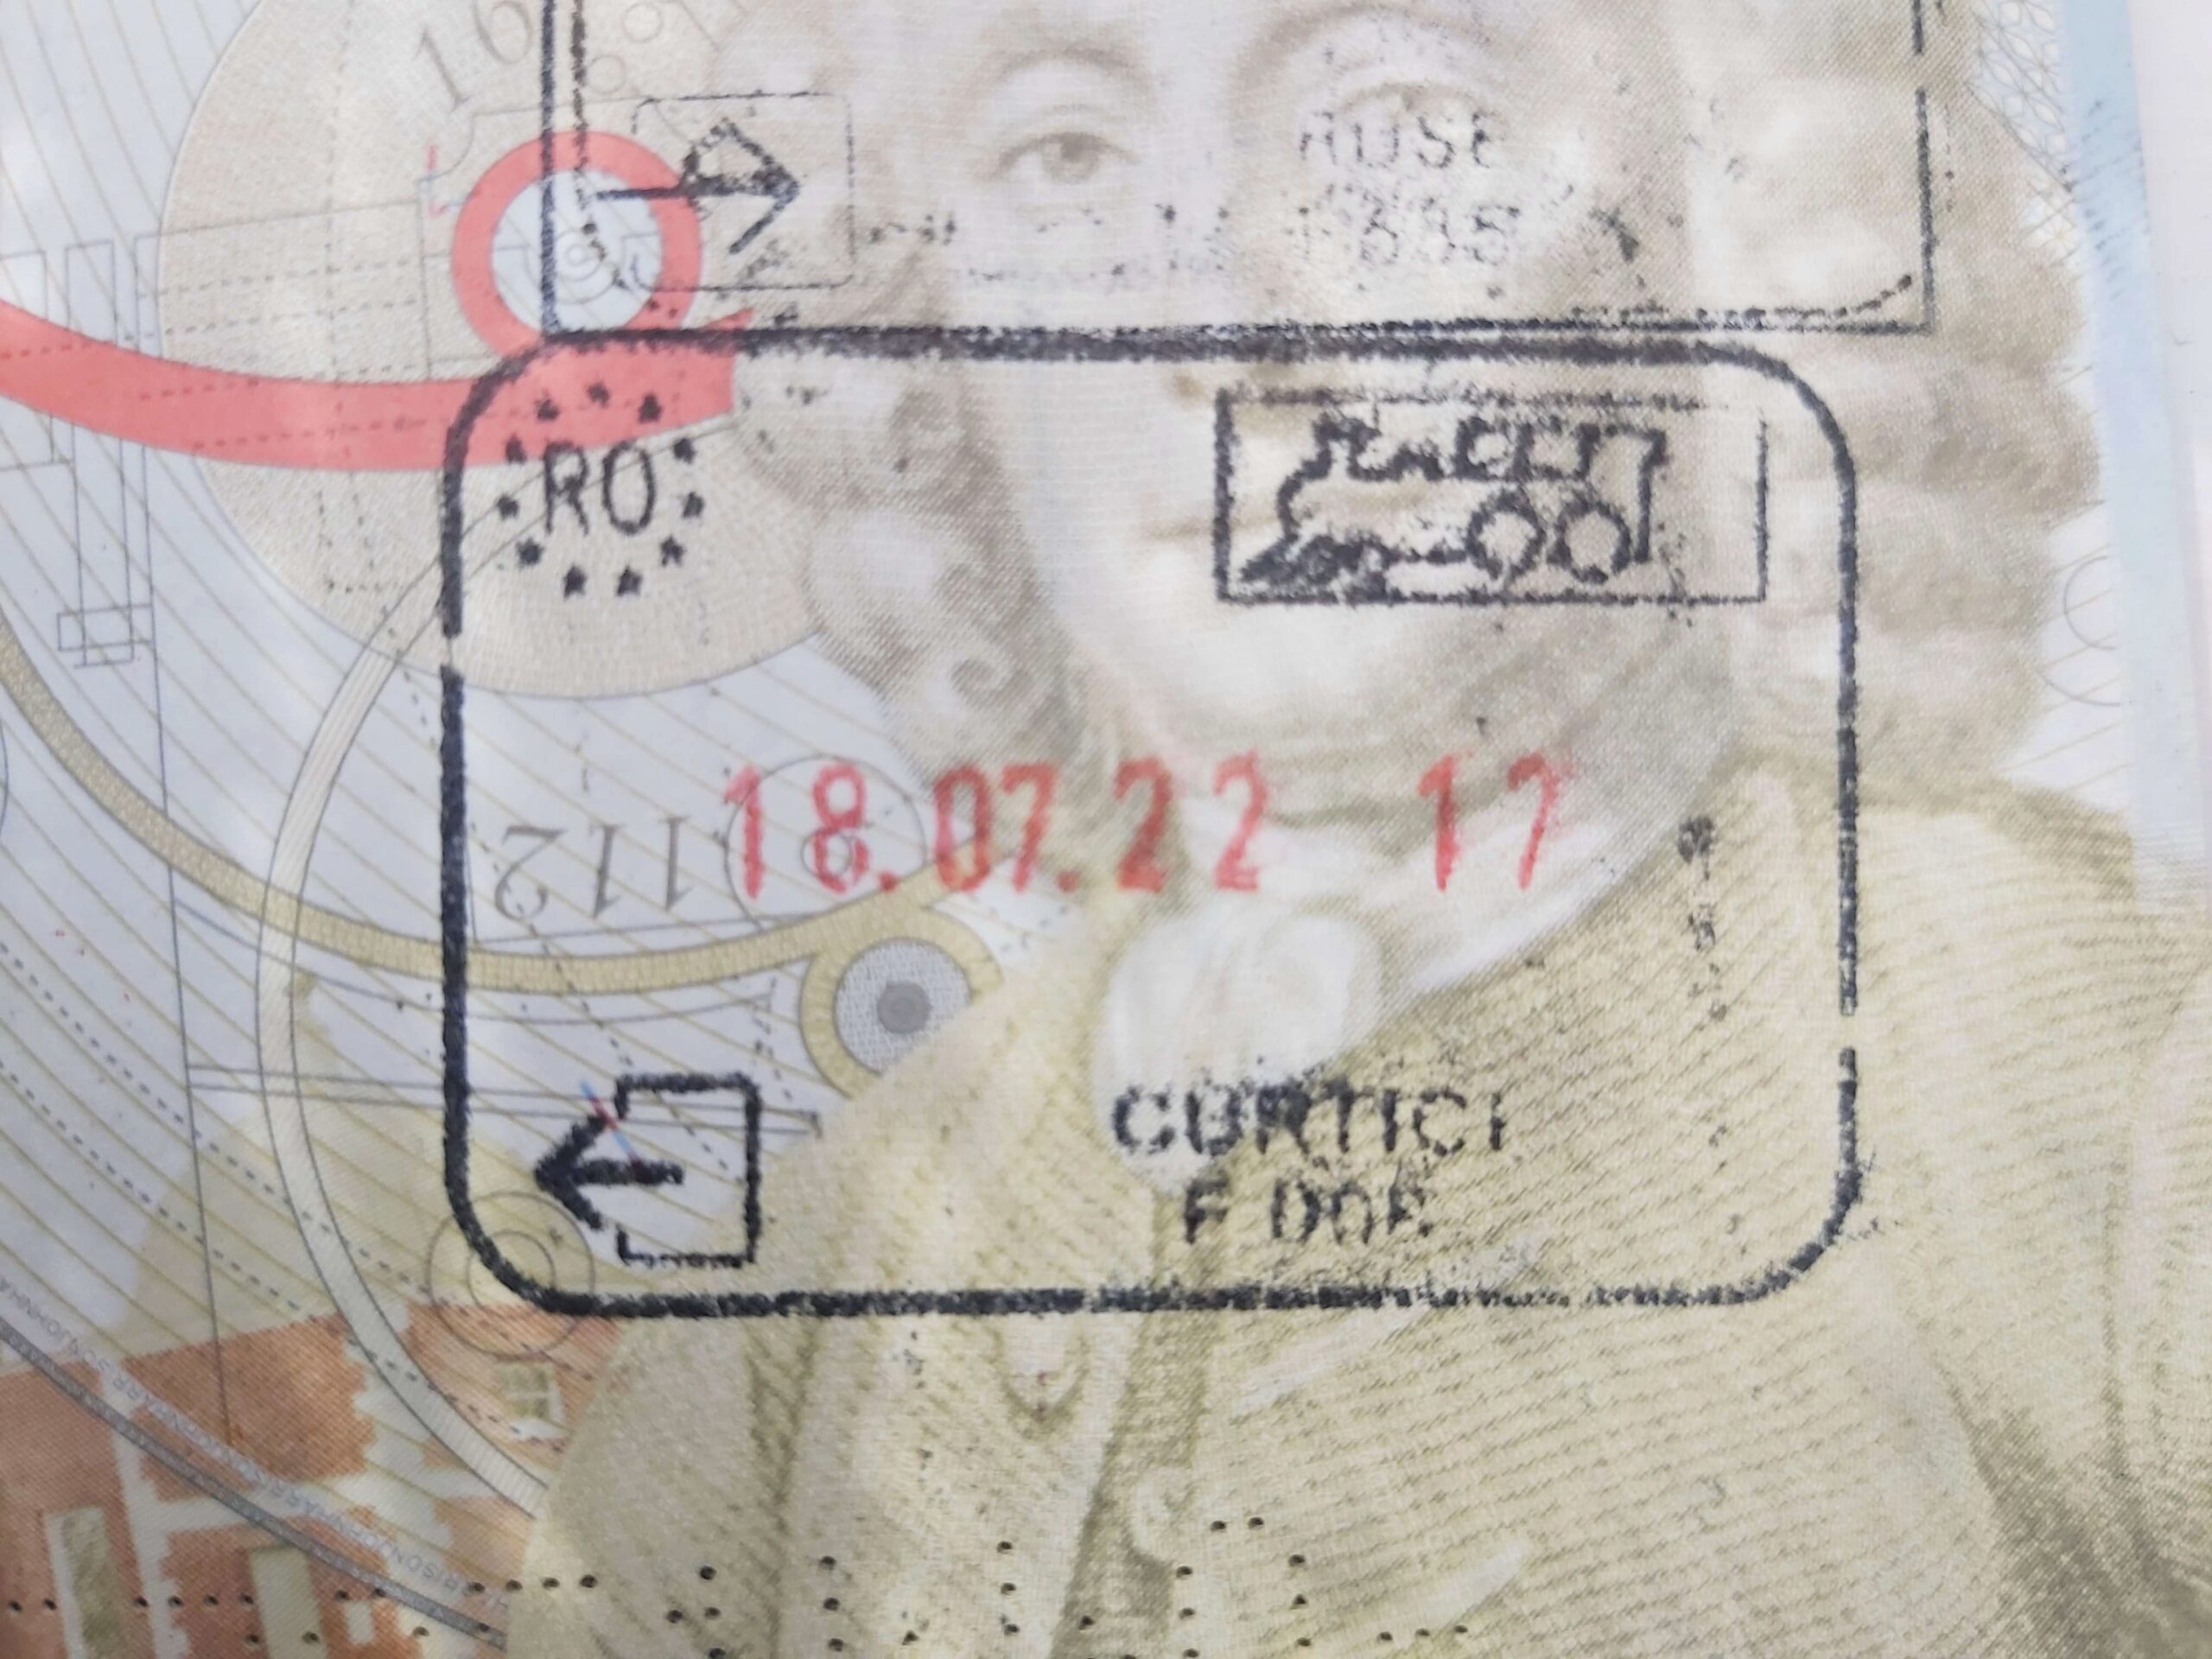 Close up of passport stamp with train symbol